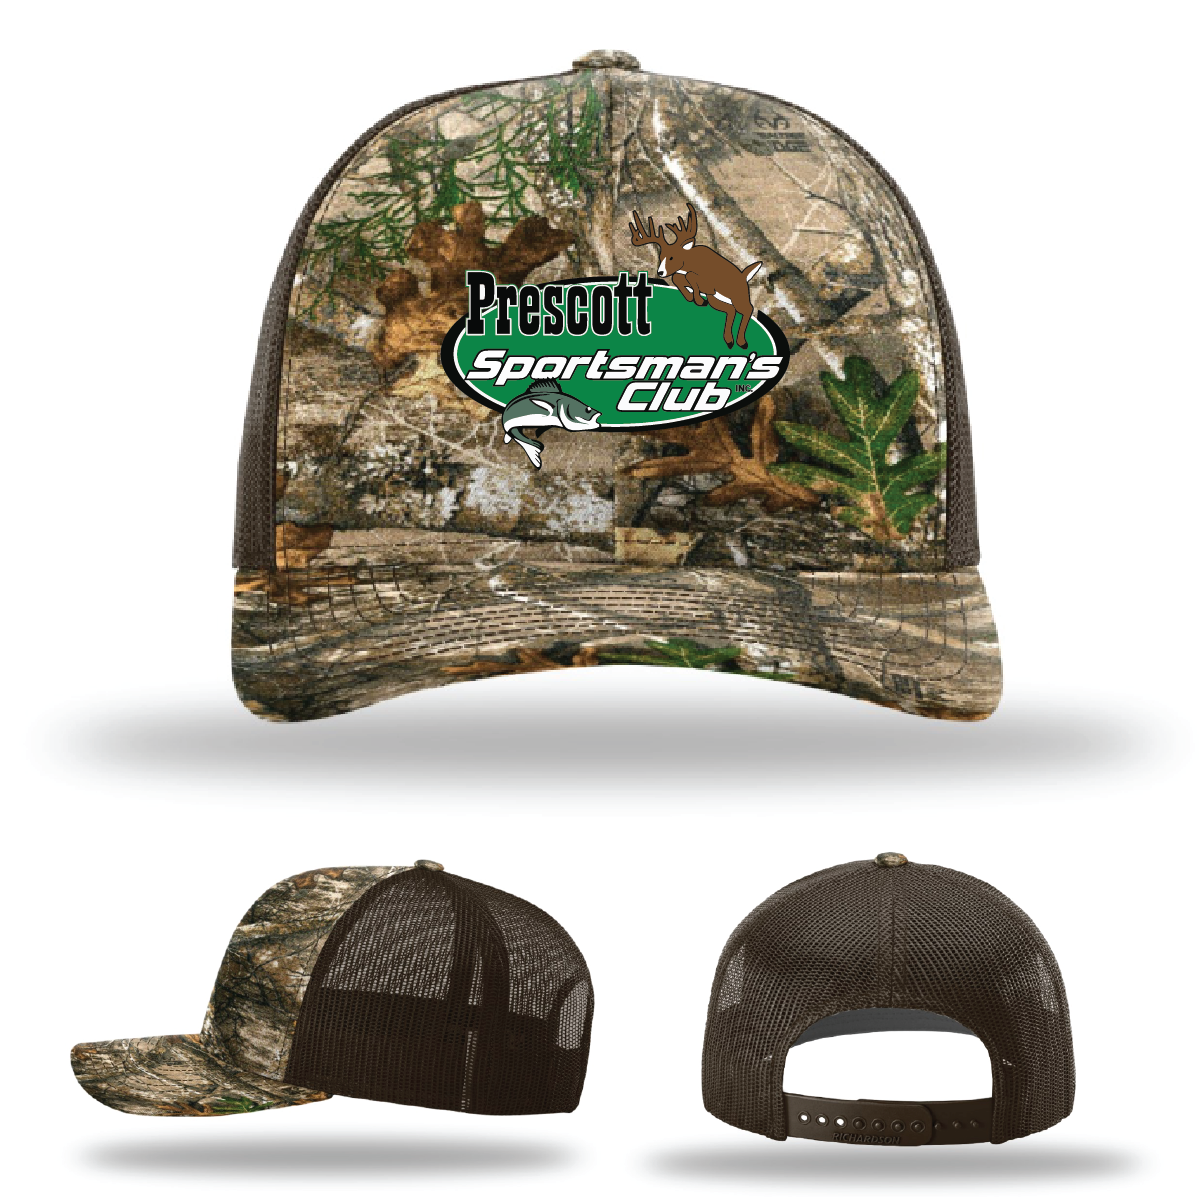 Prescott Sportsman's Club Realtree/Edge Brown Trucker Hat